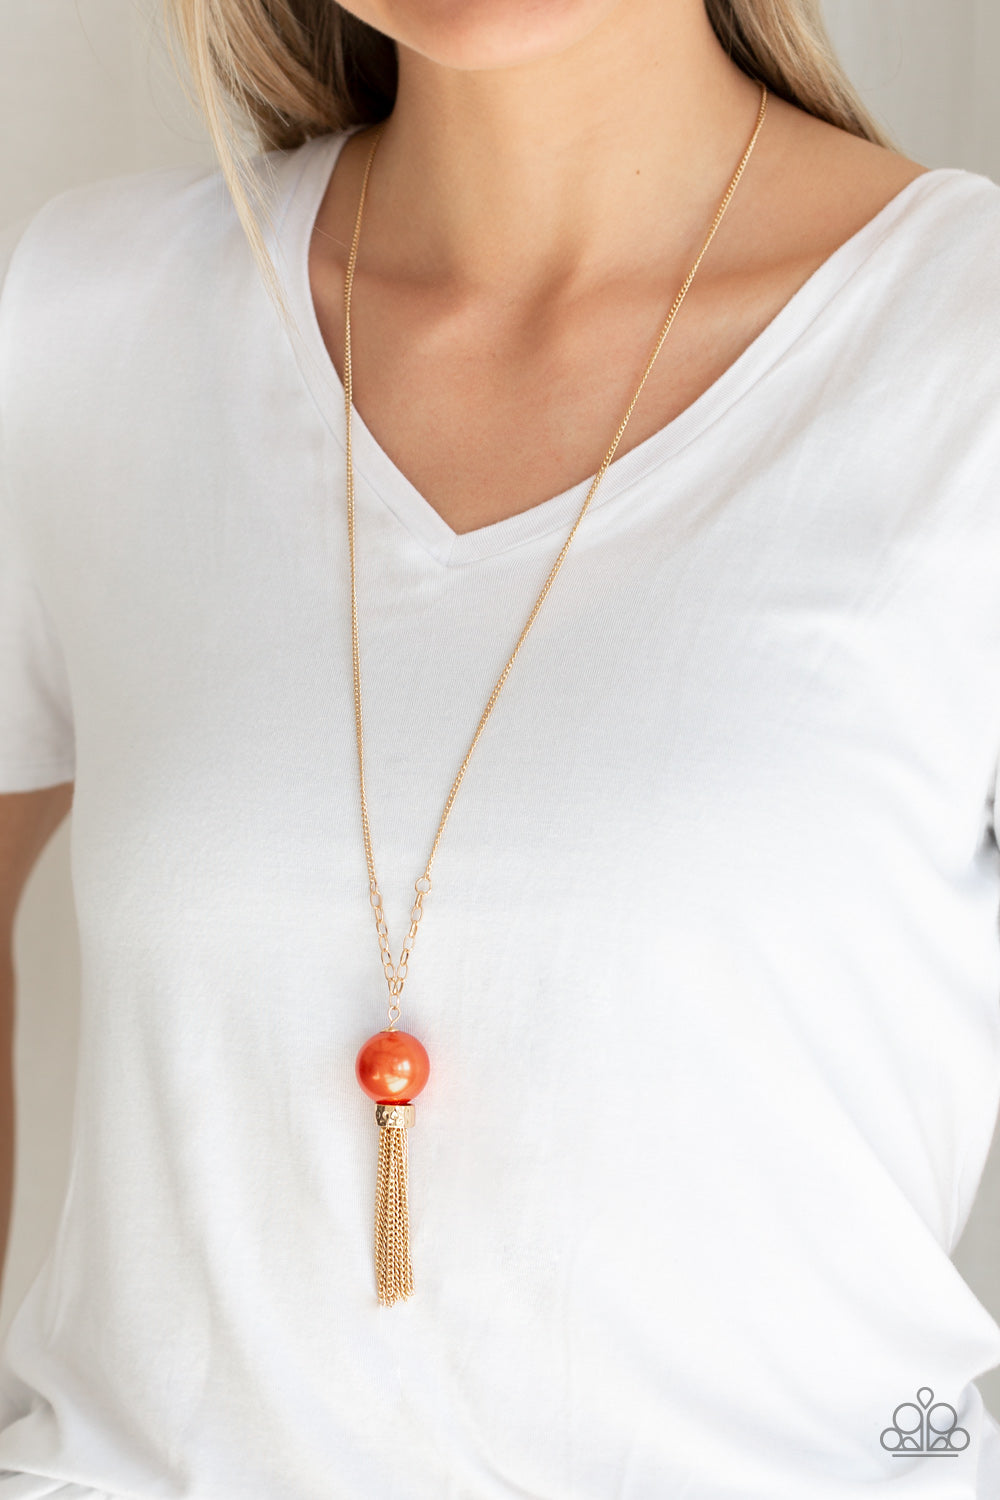 Paparazzi Accessories - Belle of the BALLROOM - Orange Necklace